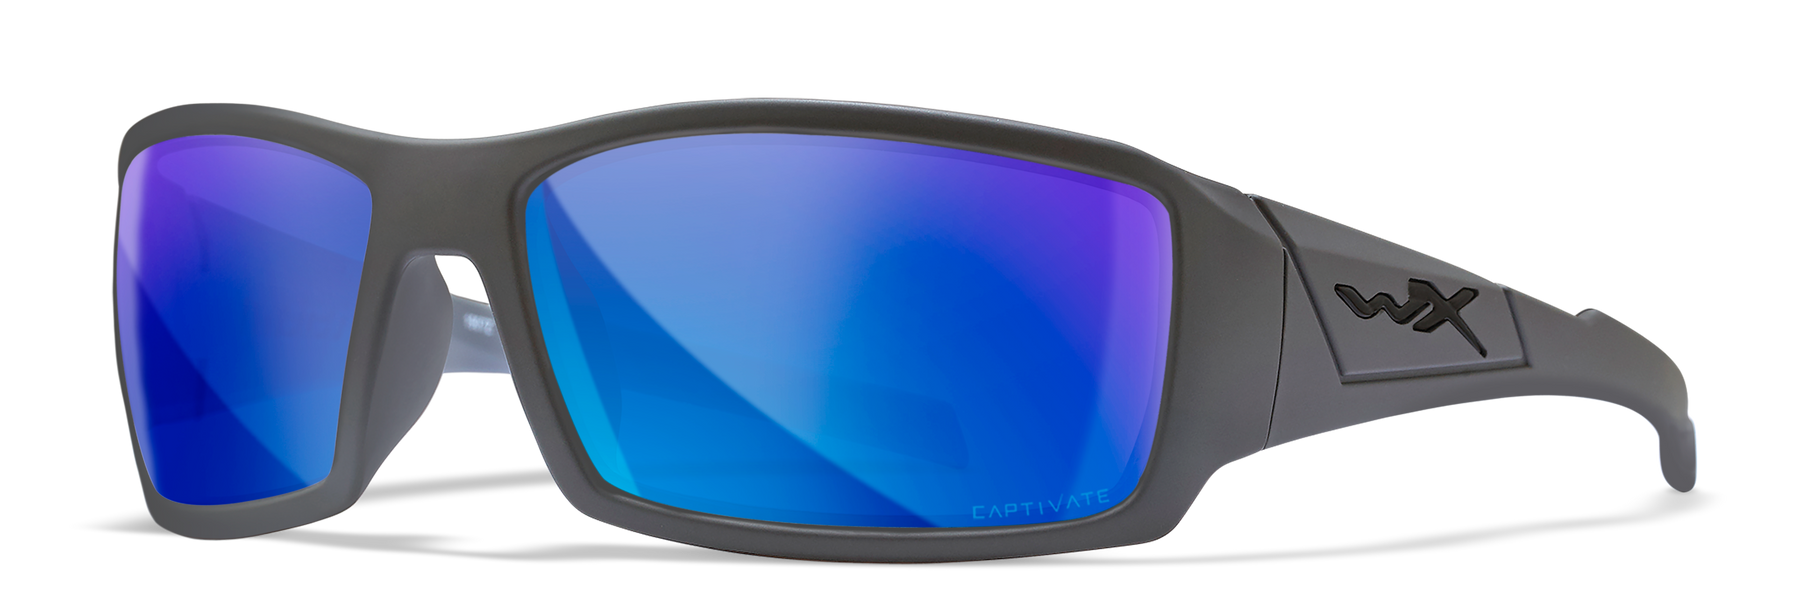 Wiley X Twisted Polarized Sunglasses